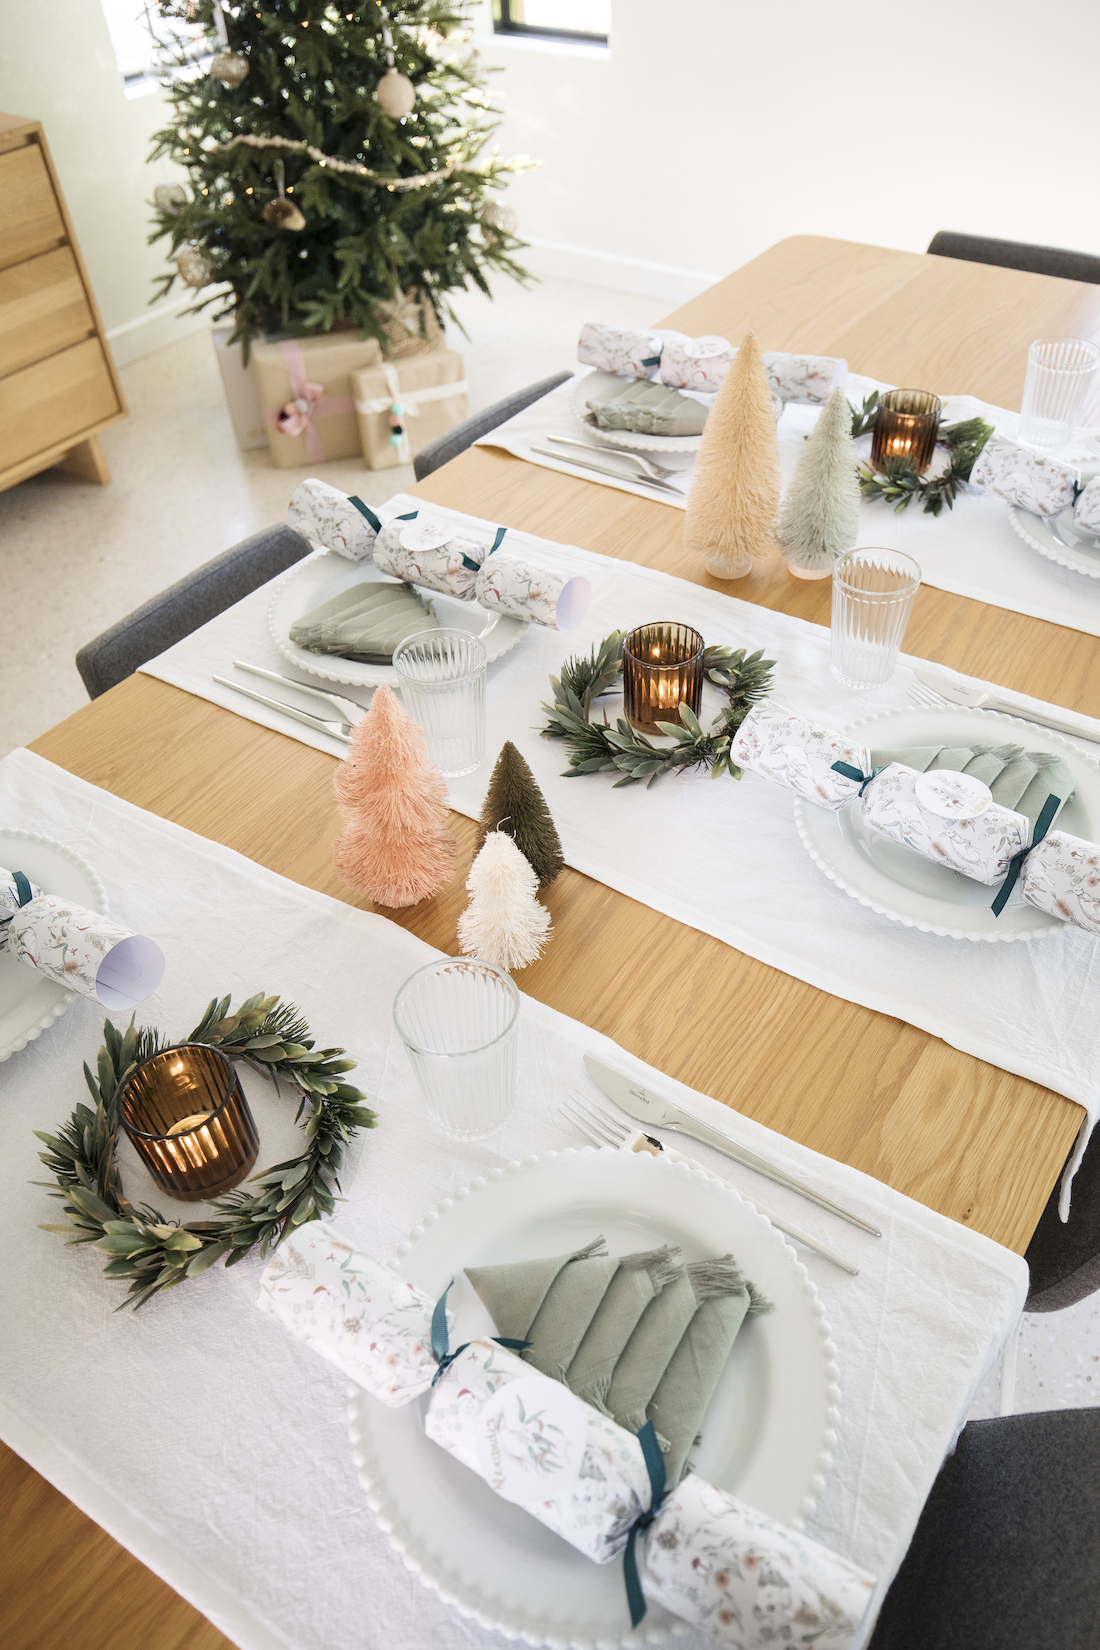 Festive Christmas table